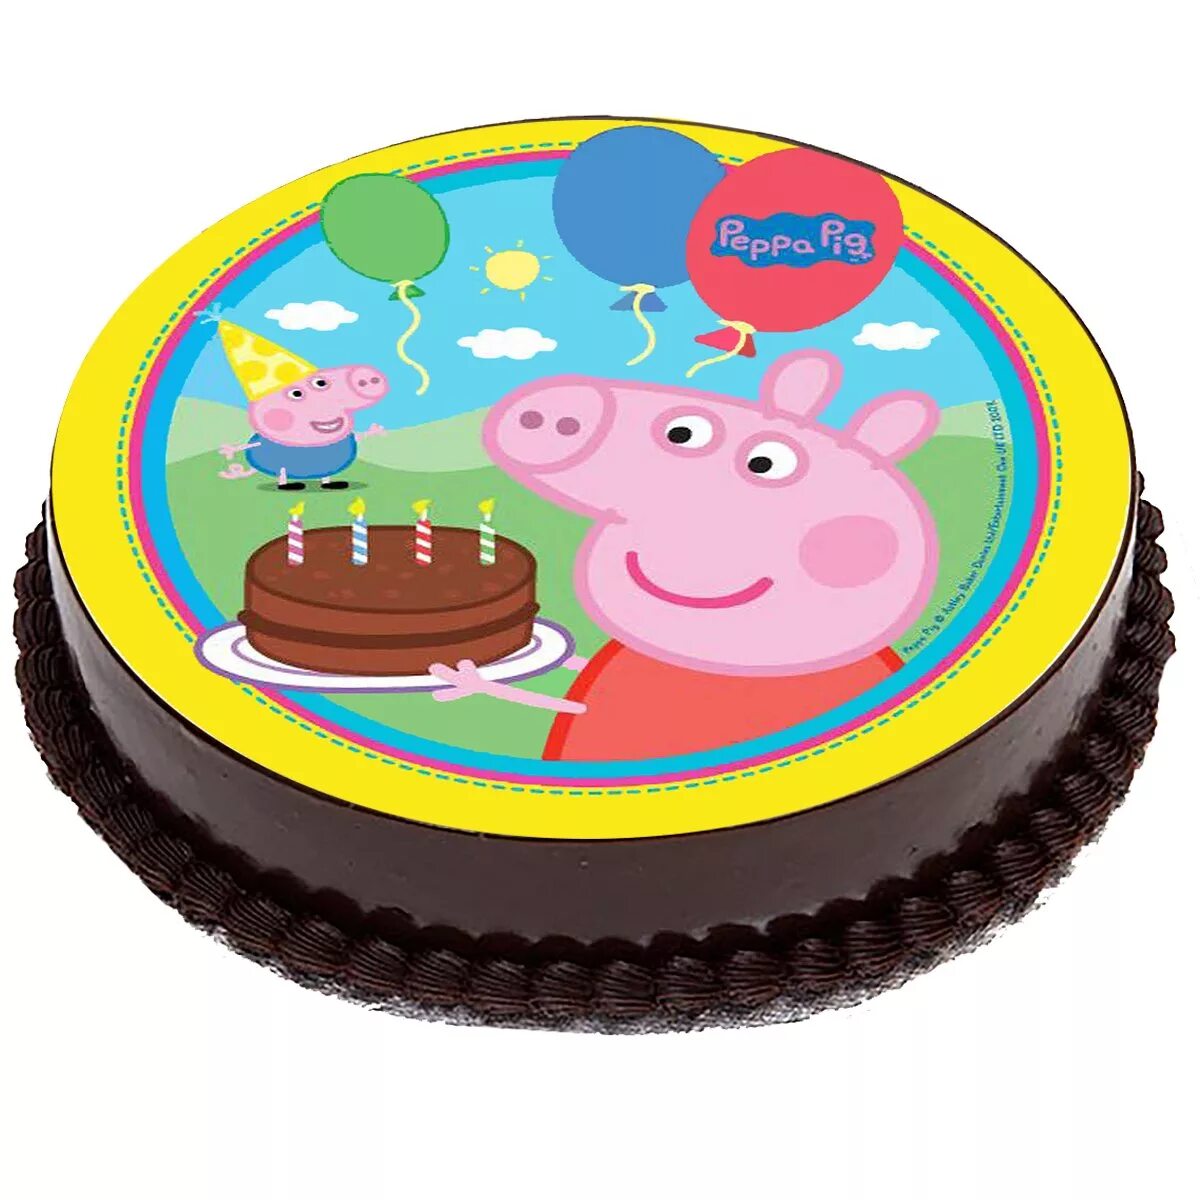 Торт свинки пеппы. Торт Свинка Пеппа. Свинка Пеппа 3д торт. Торт со свинкой Пеппой для мальчика. Торт Свинка Пеппа для мальчика 4 года.